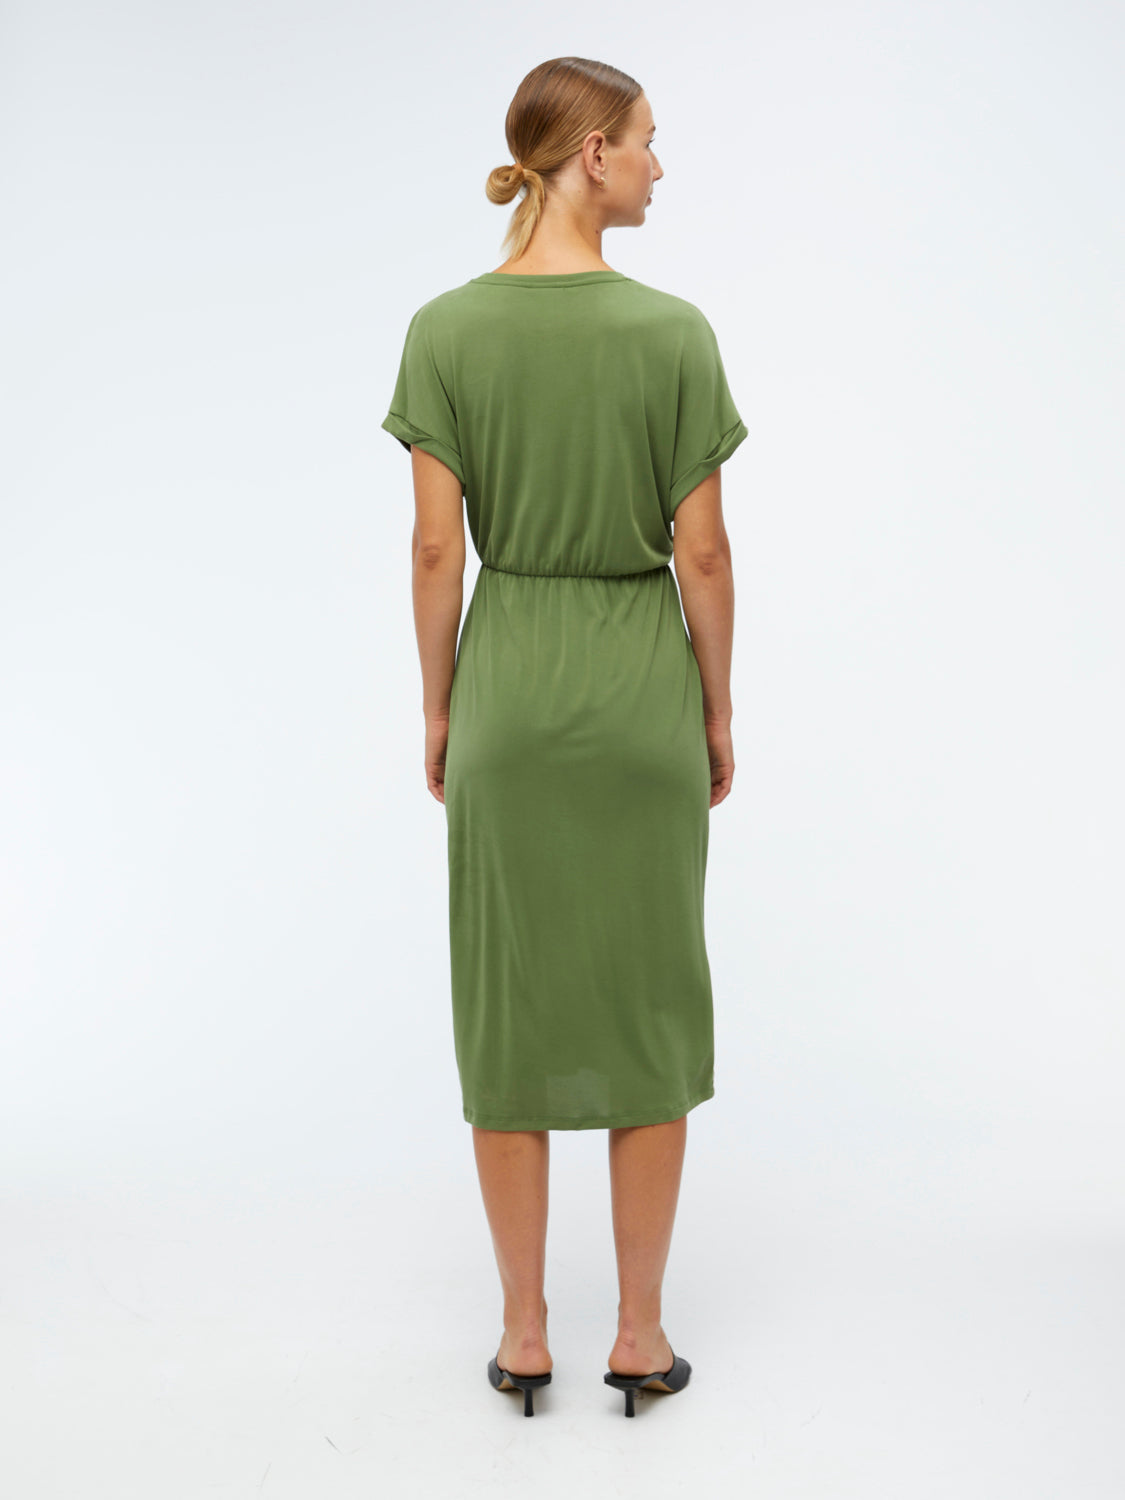 OBJANNIE Dress - Vineyard Green